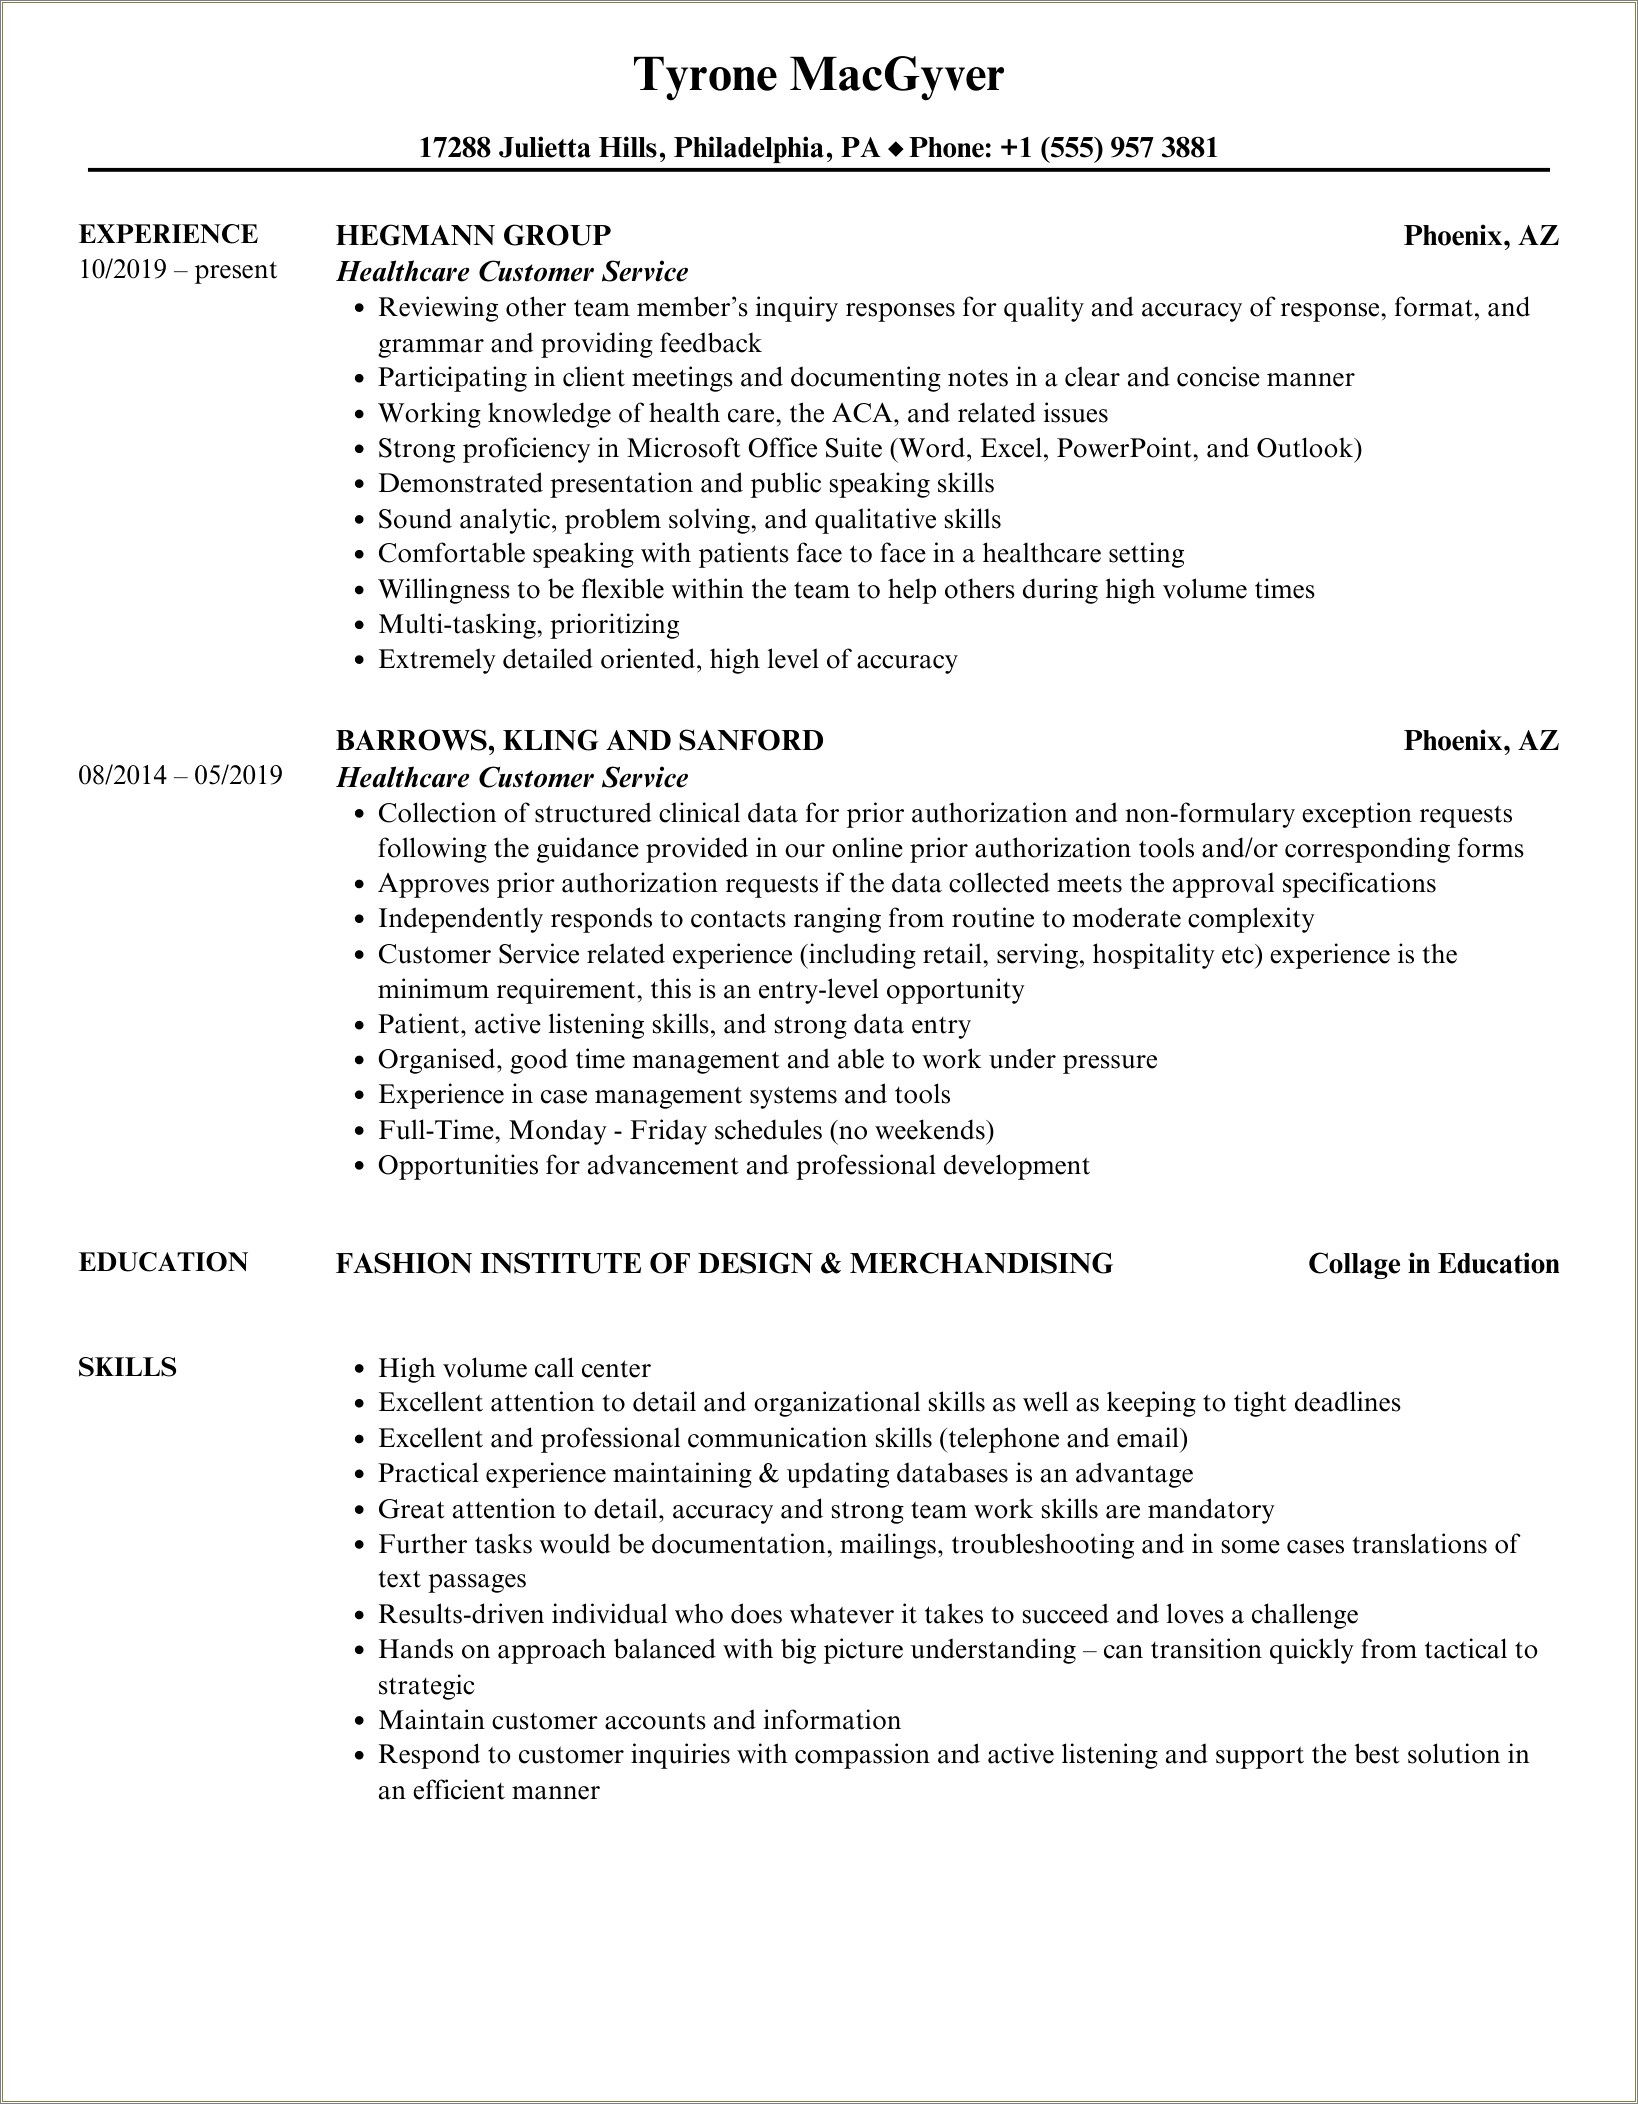 Medical Customer Service Job Description For Resume